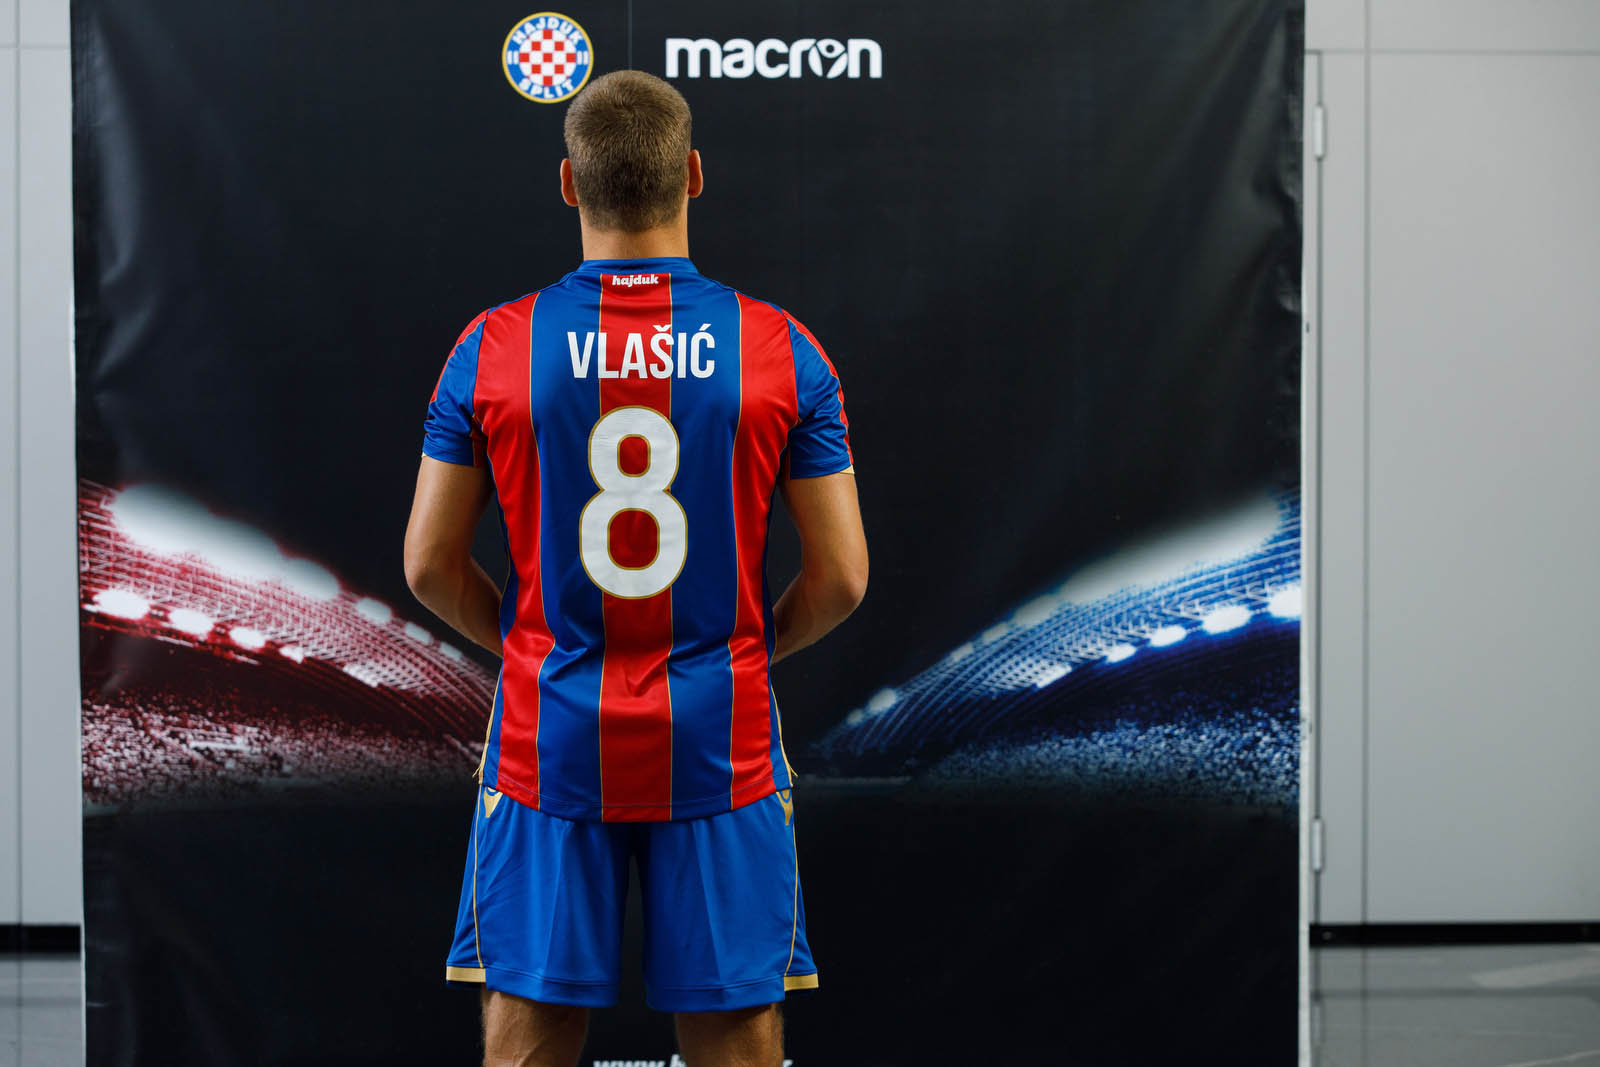 Macron Hajduk Split 17-18 Third Kit Released - Footy Headlines